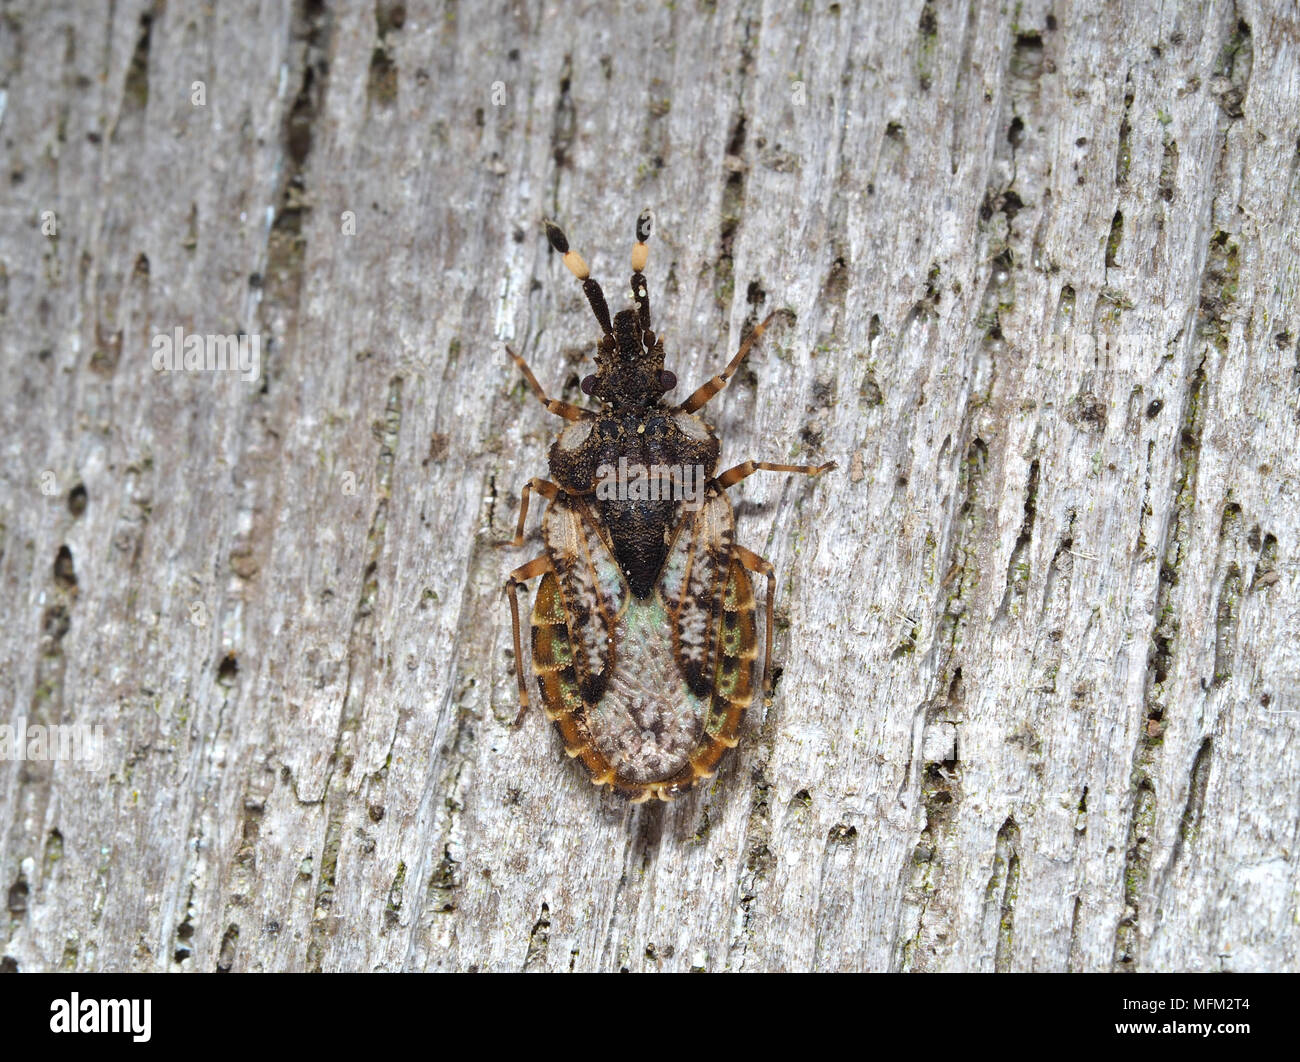 Aradus sp. bug close-up Stock Photo